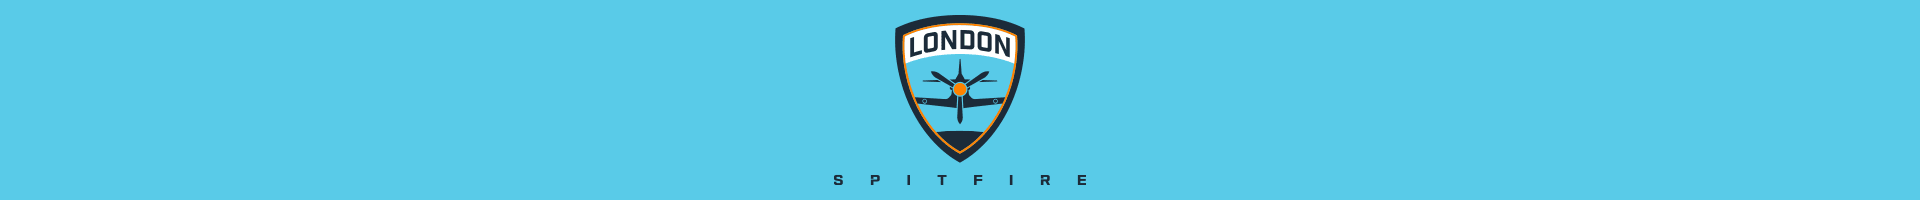 London Spitfire Logo - London Spitfire Official Player Jerseys - INTO THE AM